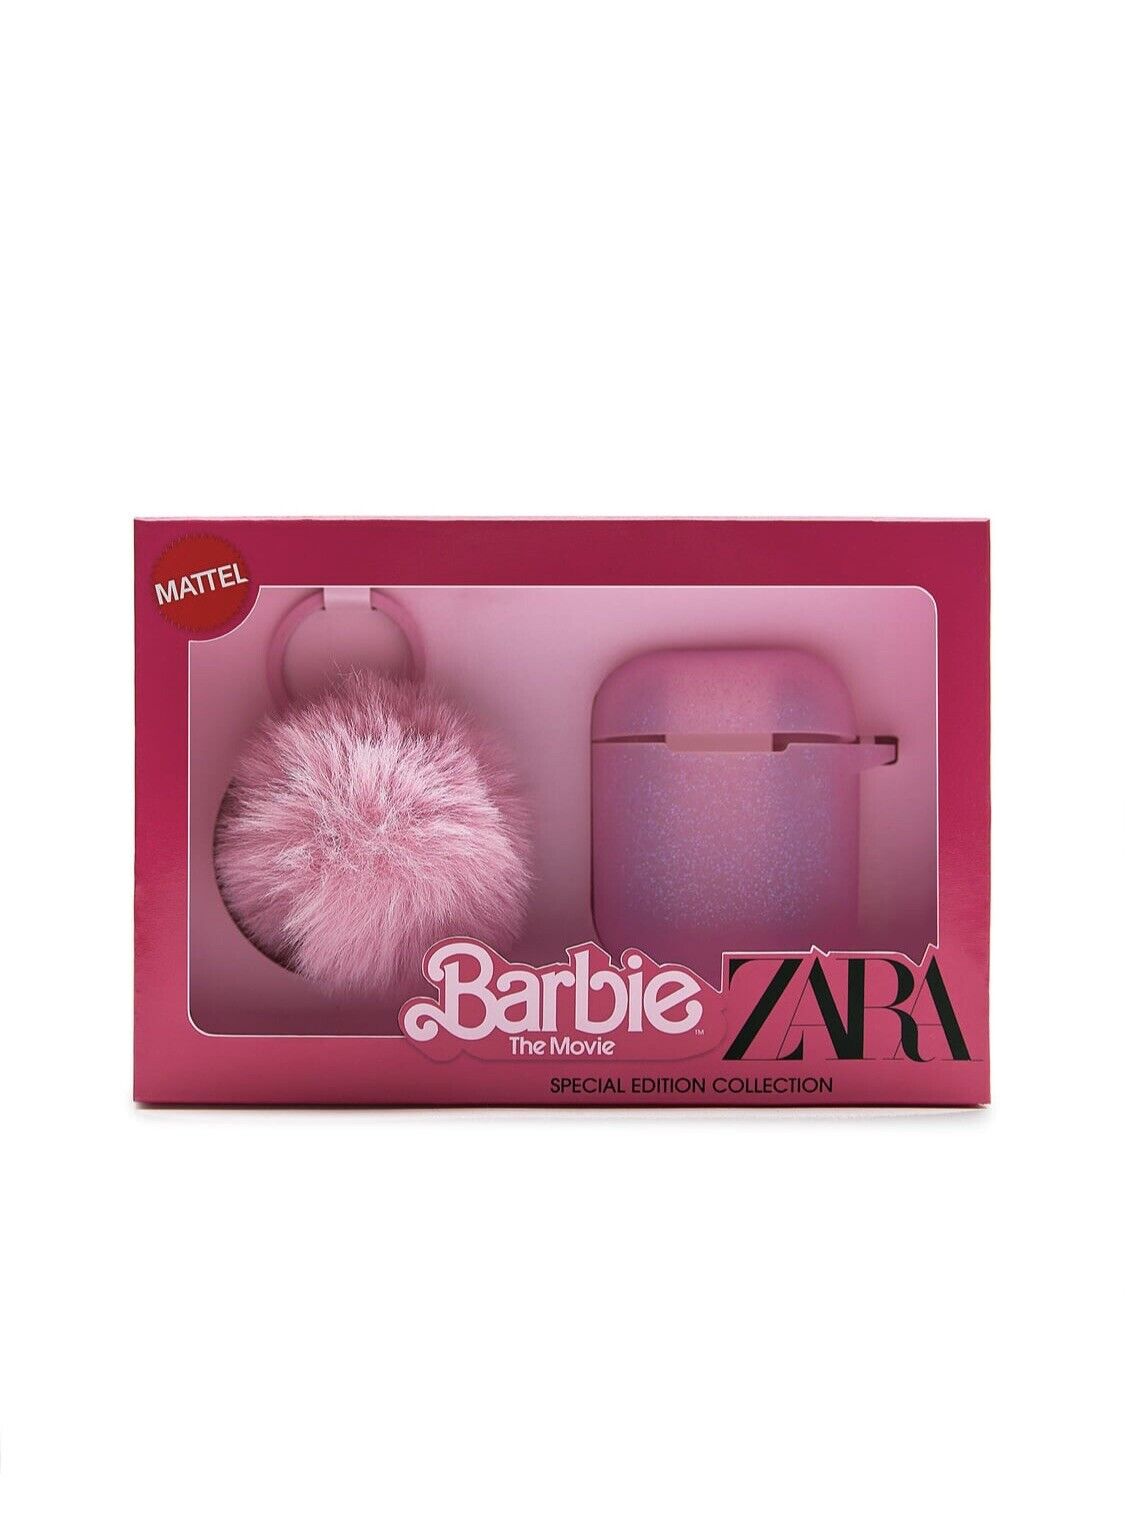 ZARA x Barbie The Movie AirPod Case & Fob-New In Box- Perfect Barbie gift